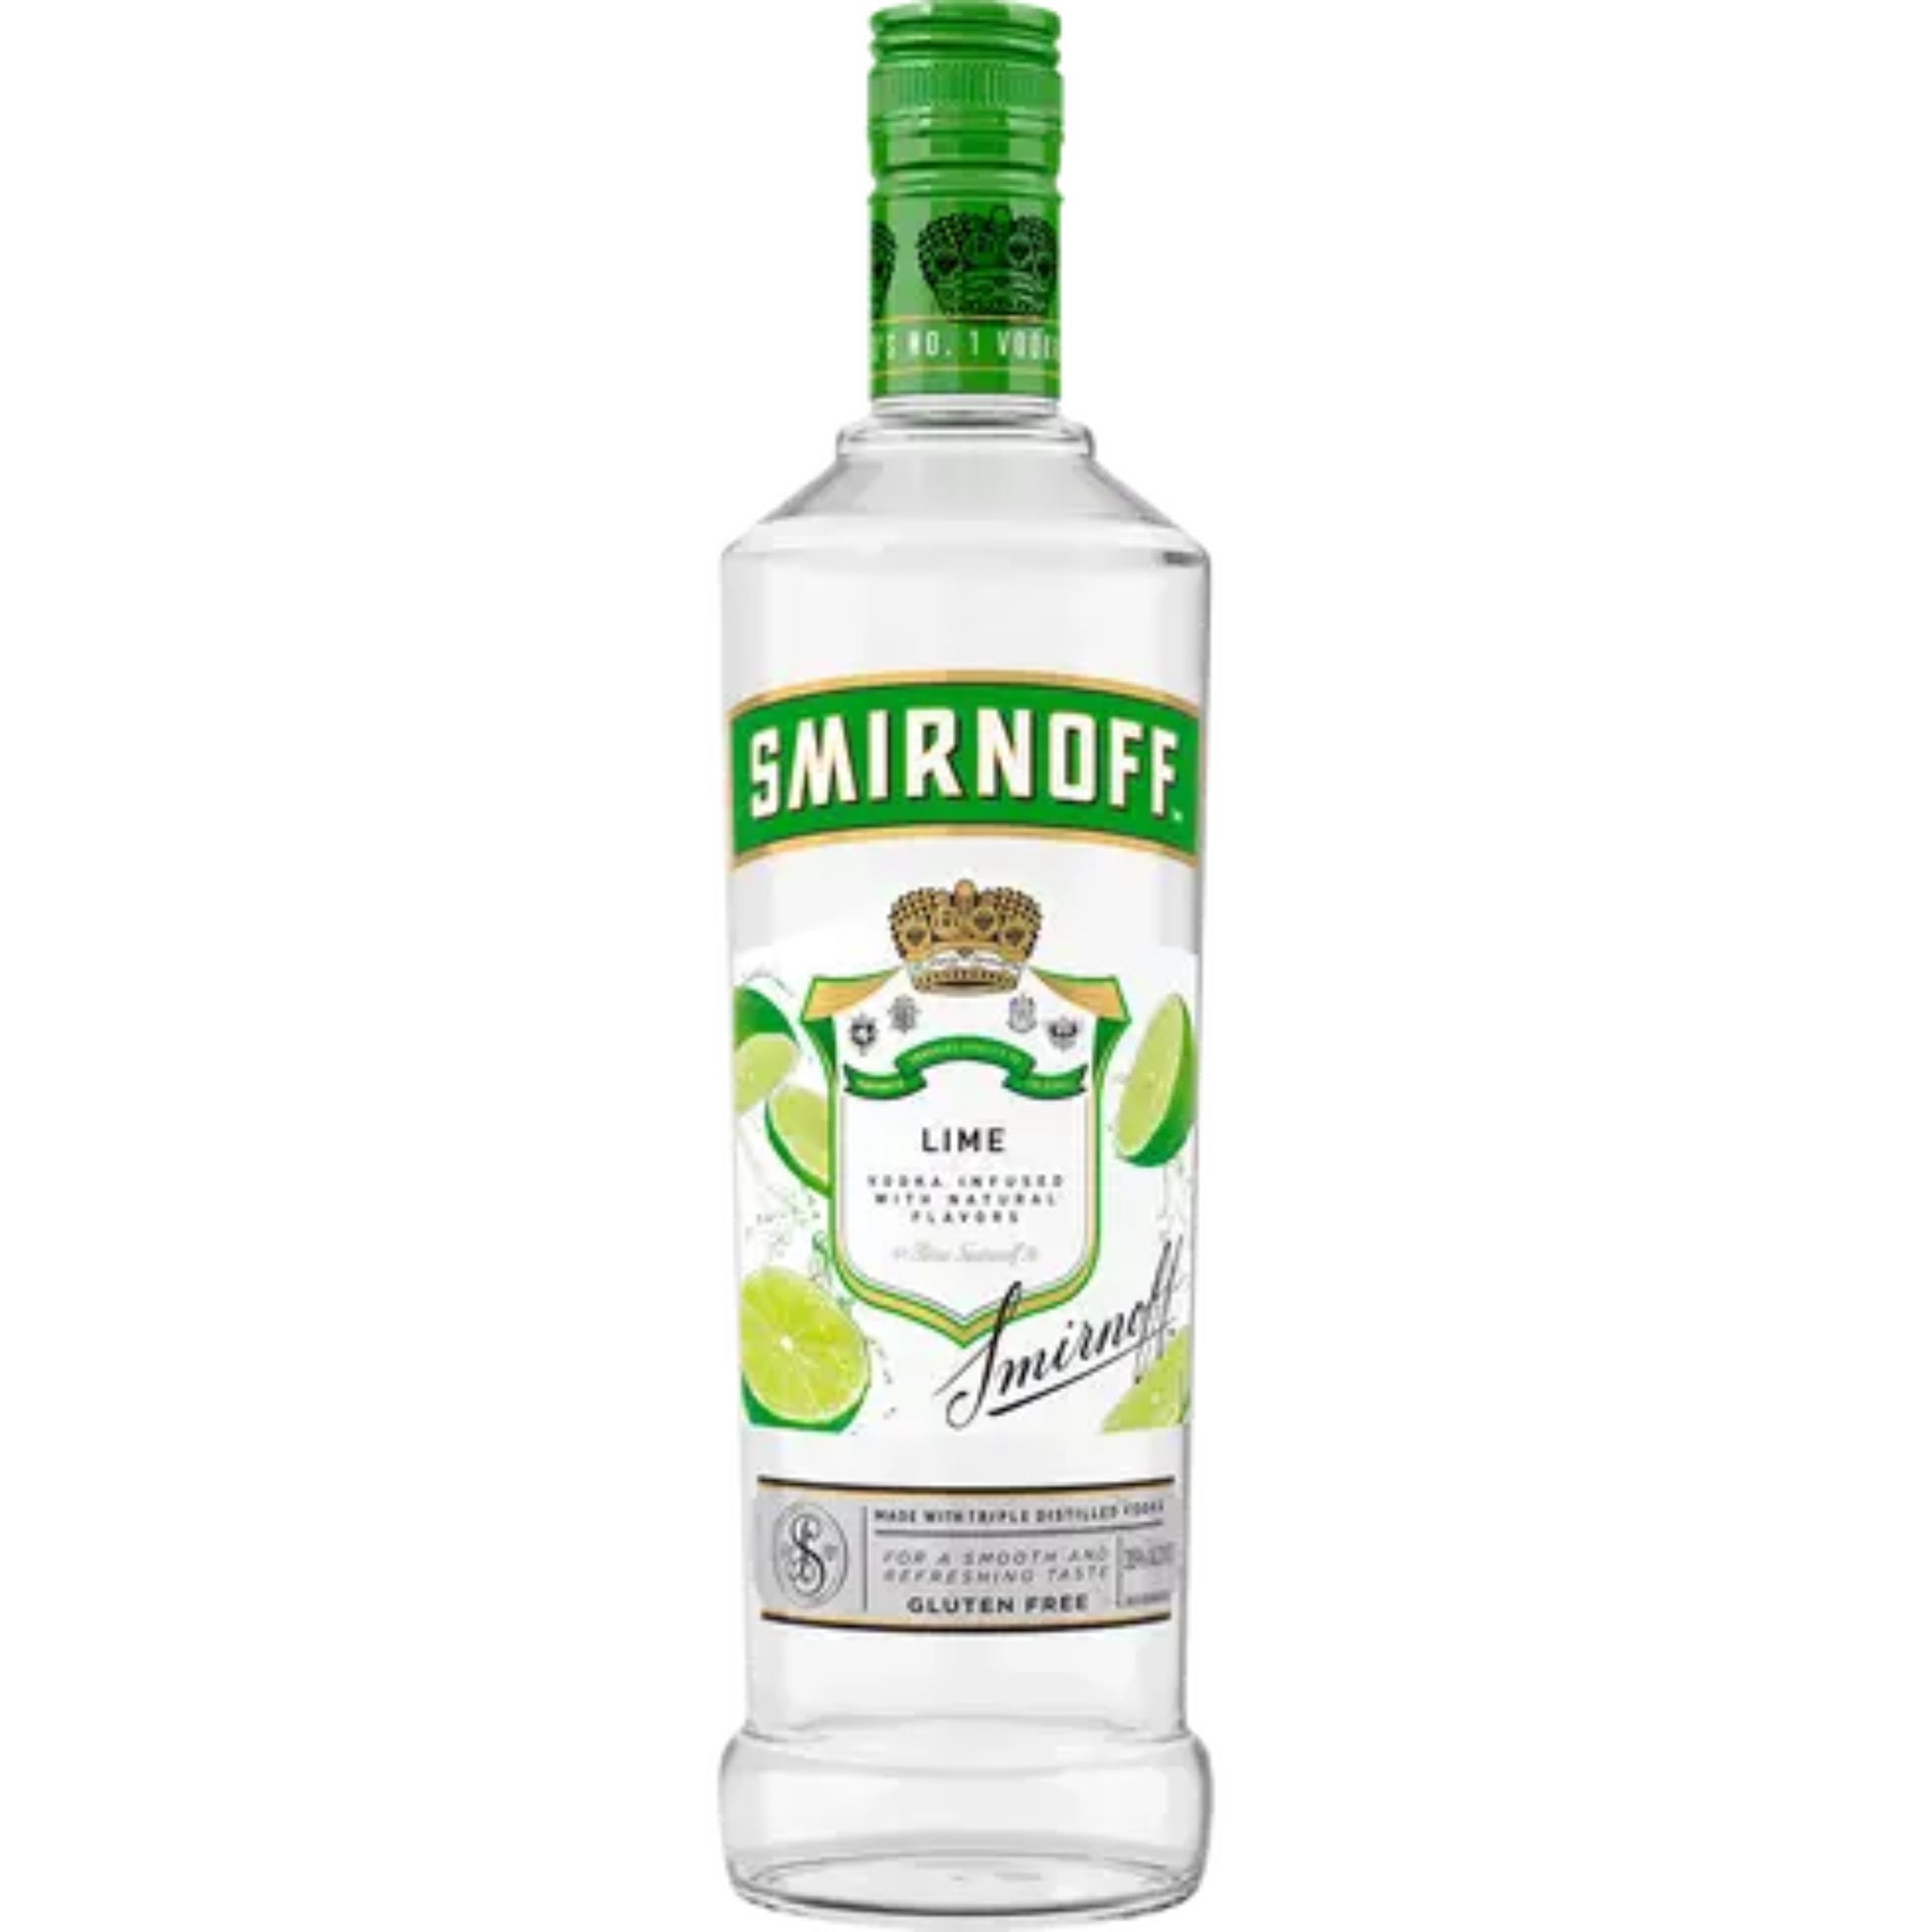 Smirnoff Lime Vodka - Liquor Geeks